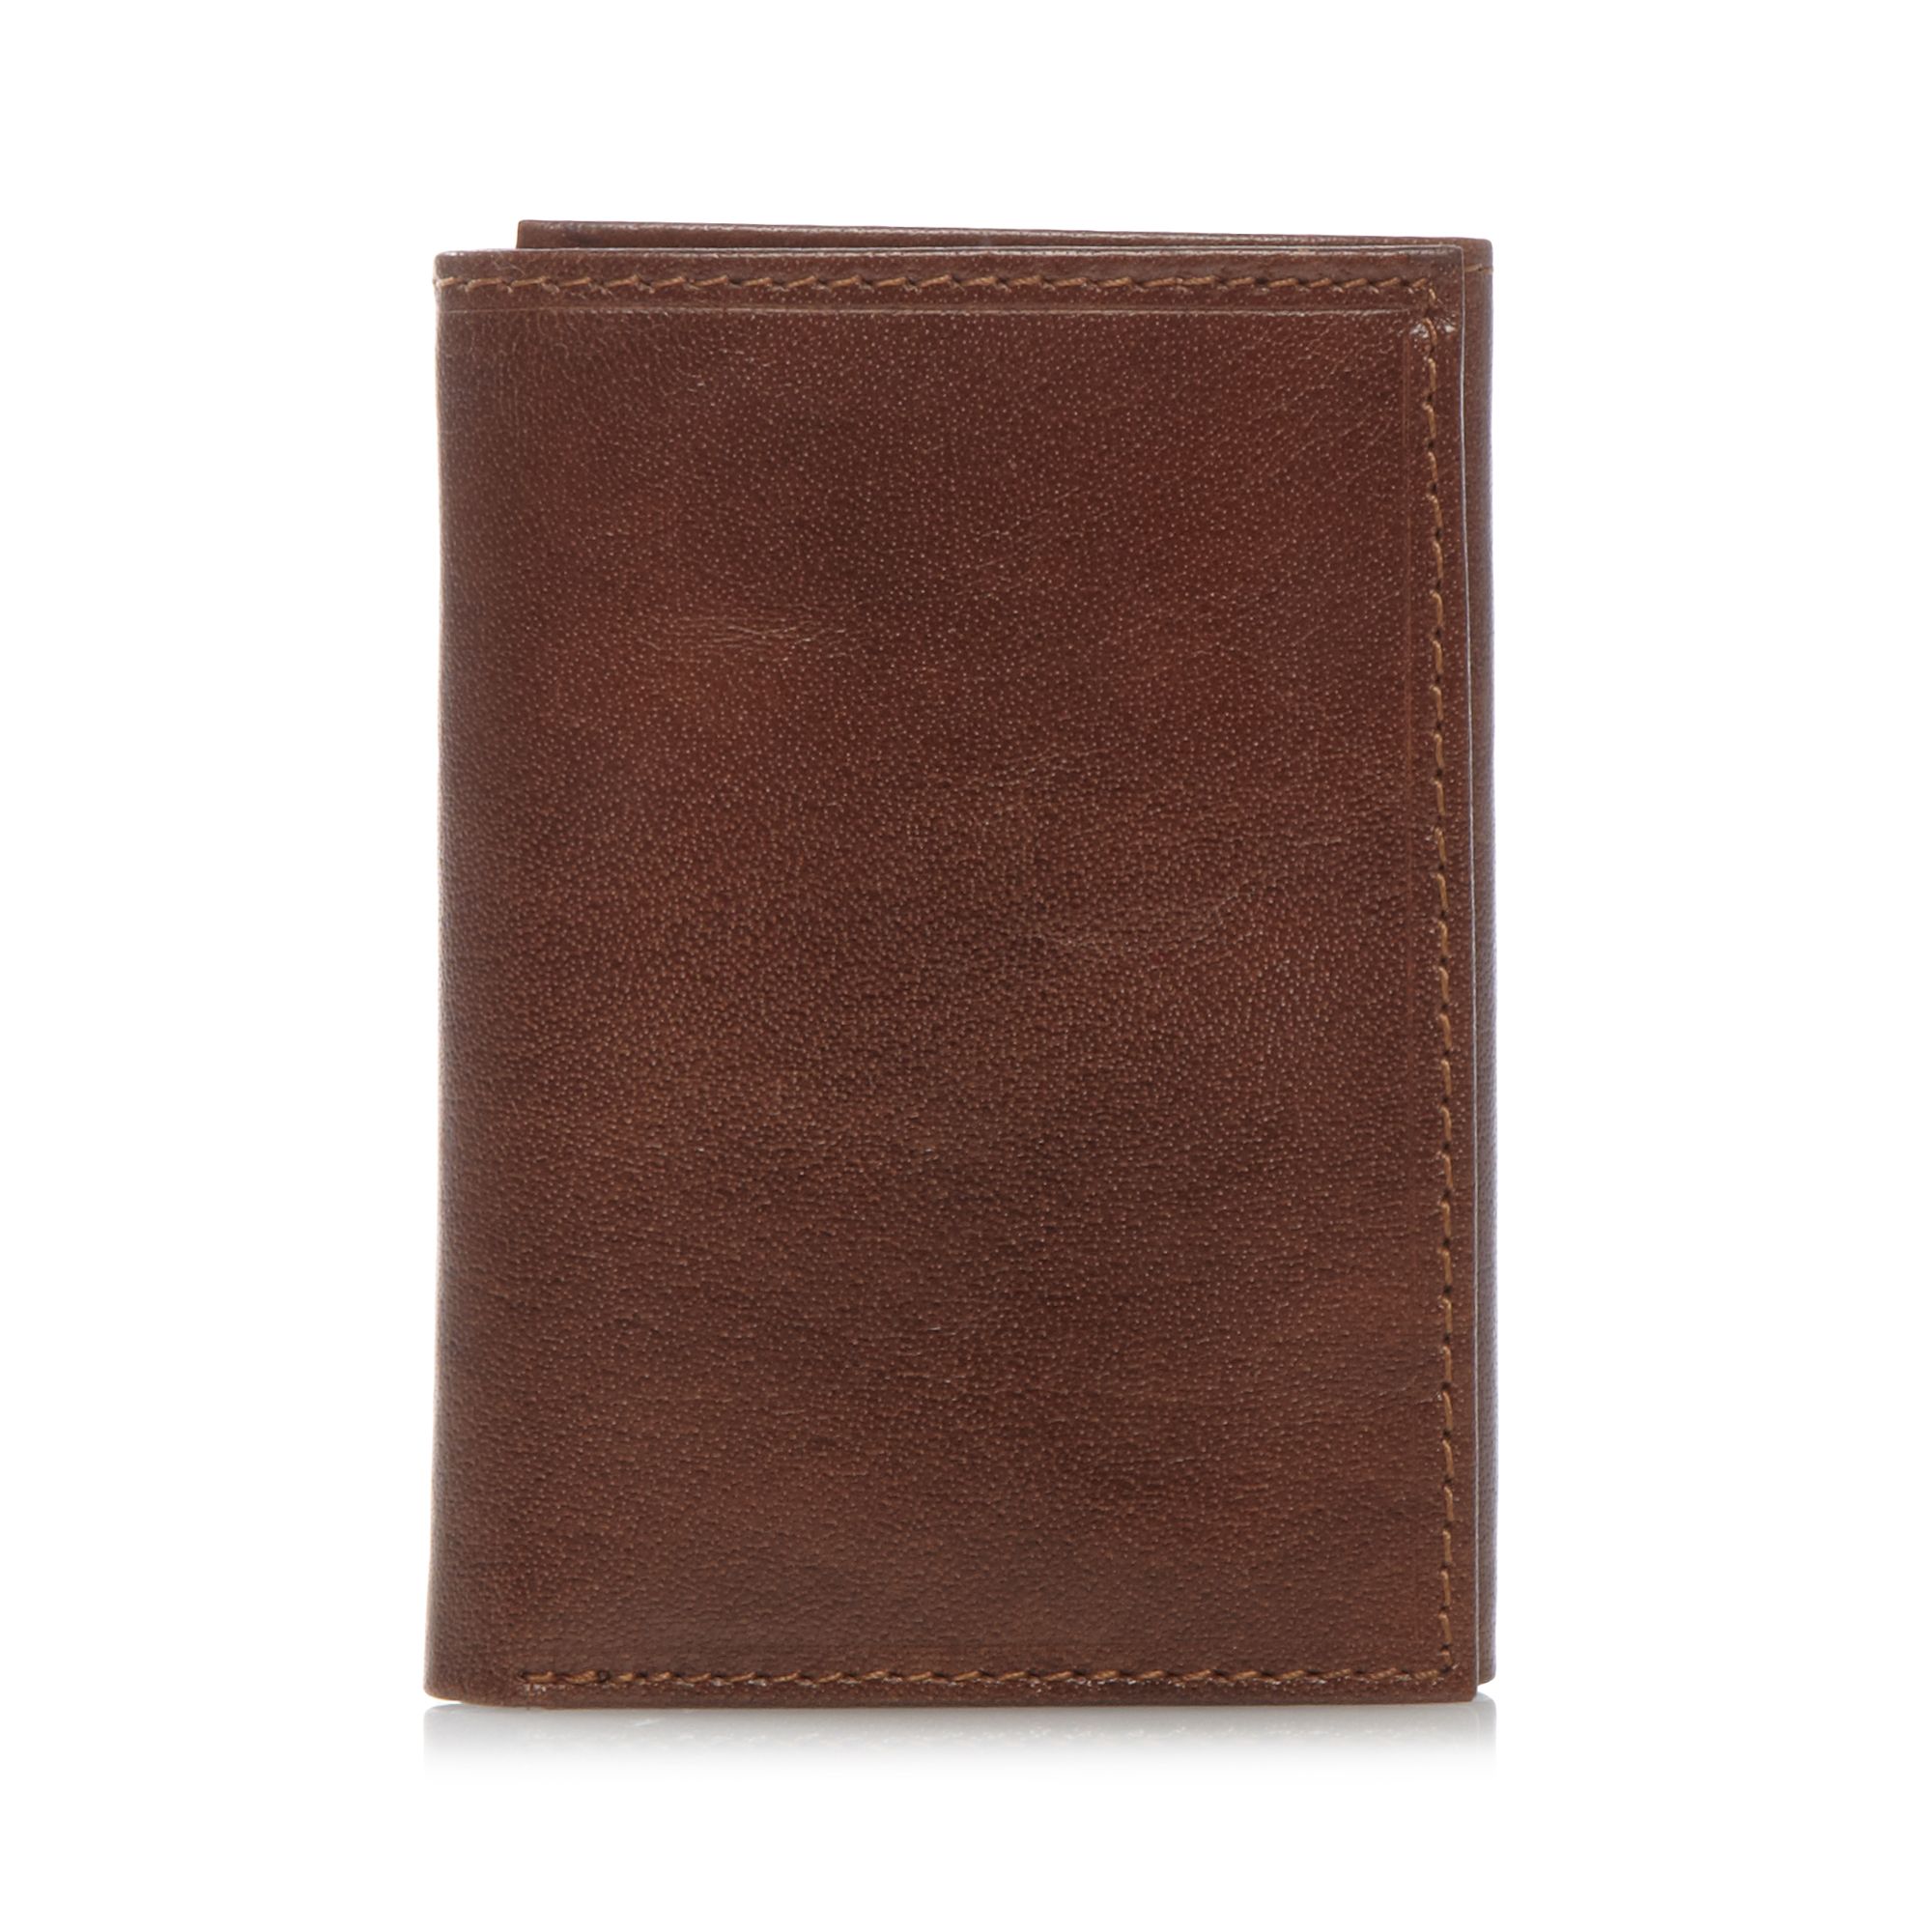 J By Jasper Conran Mens Designer Tan Leather Trifold Wallet From Debenhams | eBay